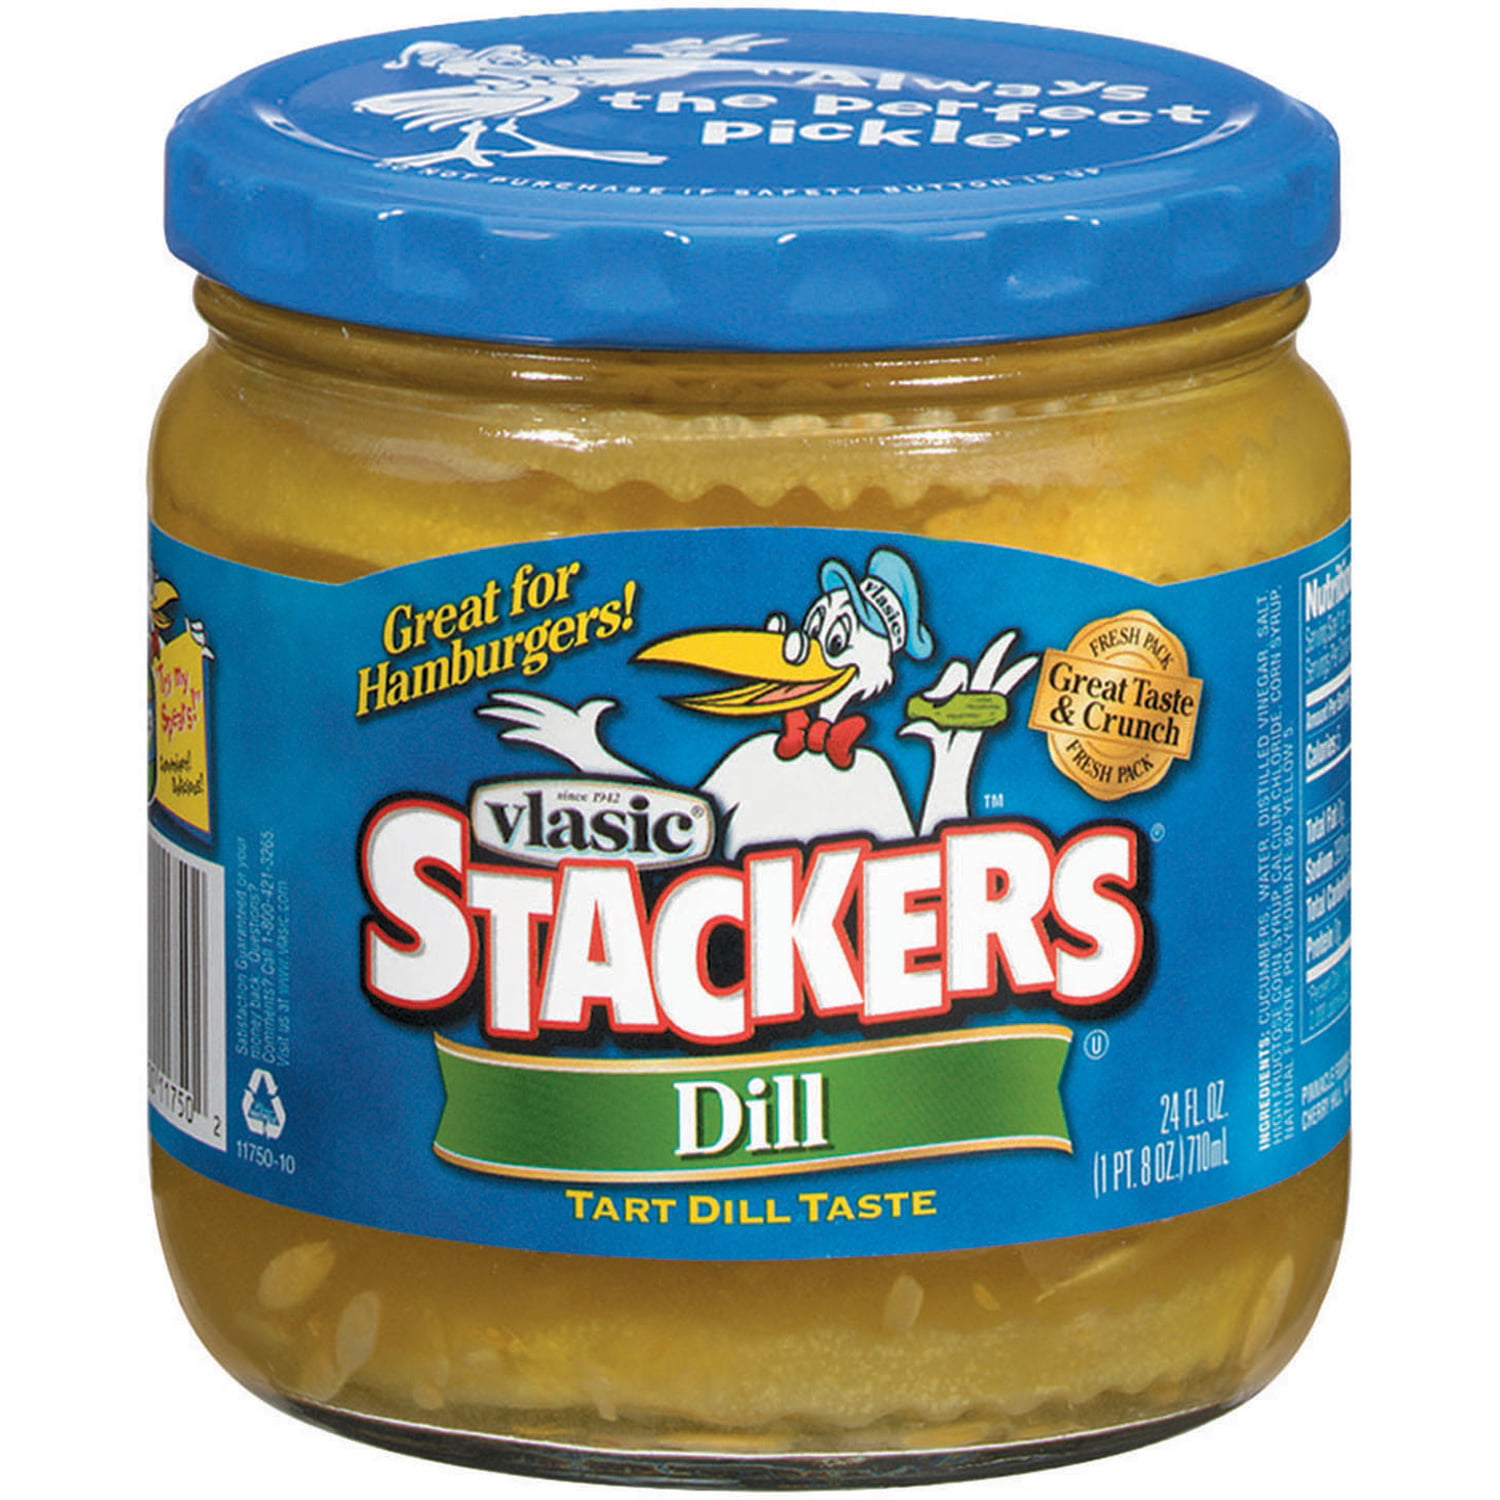 Vlasic Stackers Dill Pickles 24 Oz Walmartcom.